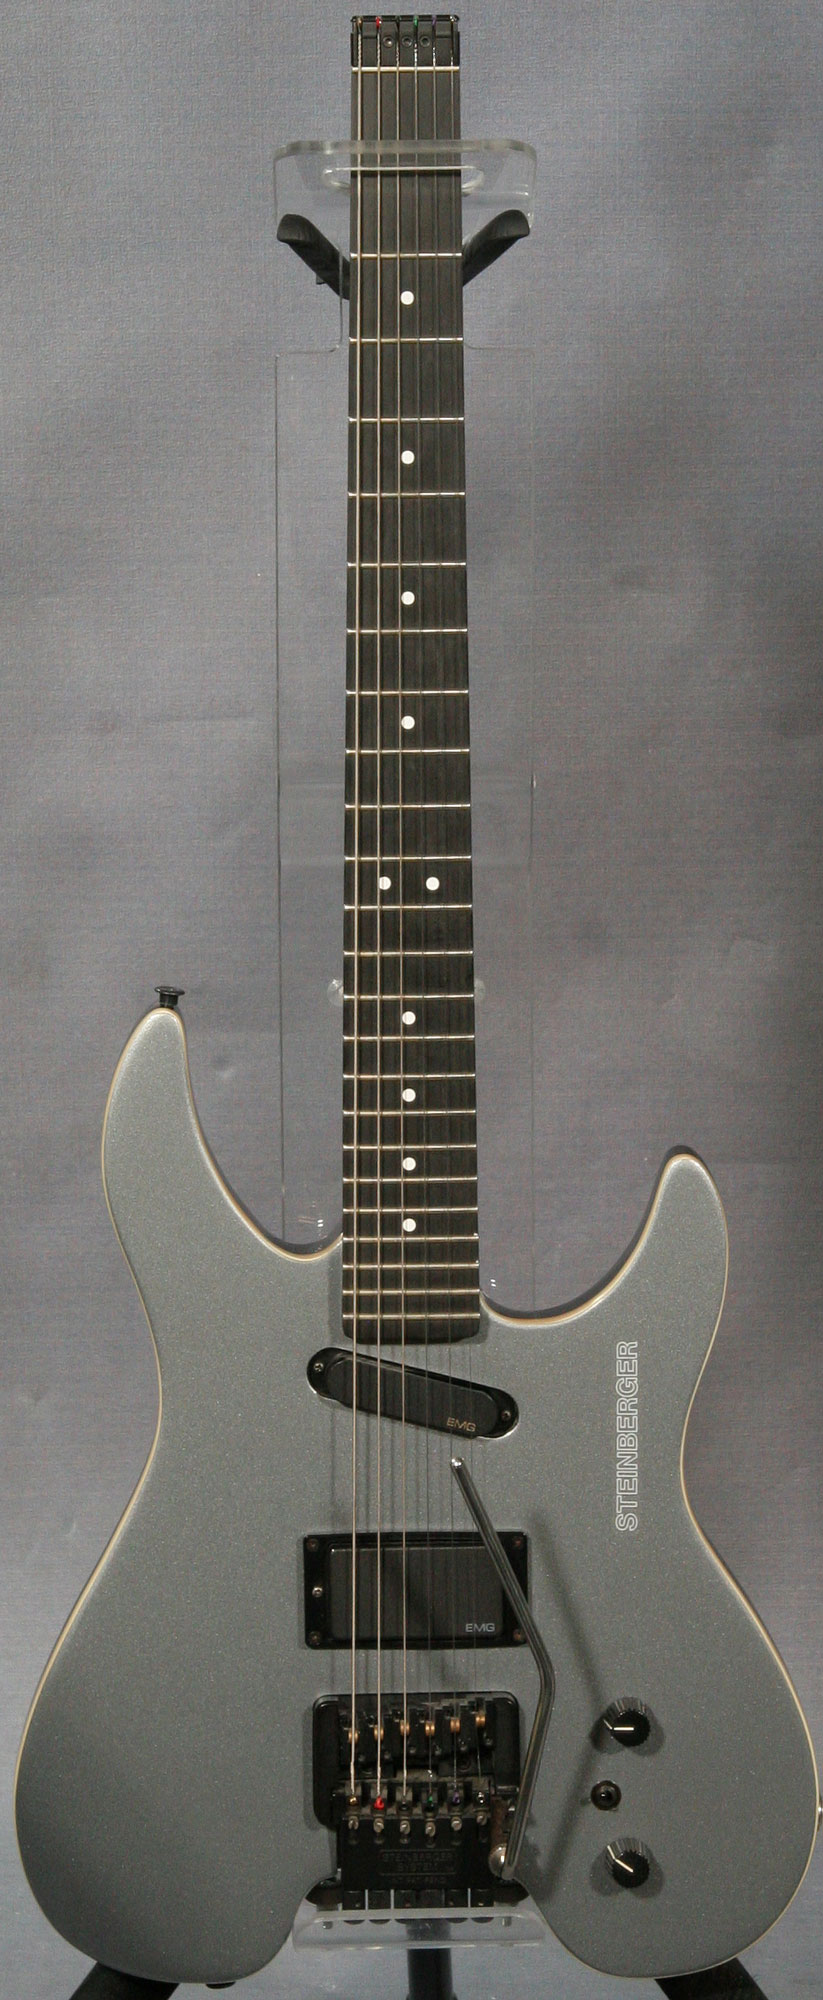 steinberger-m-guitar-silver-2000.jpg